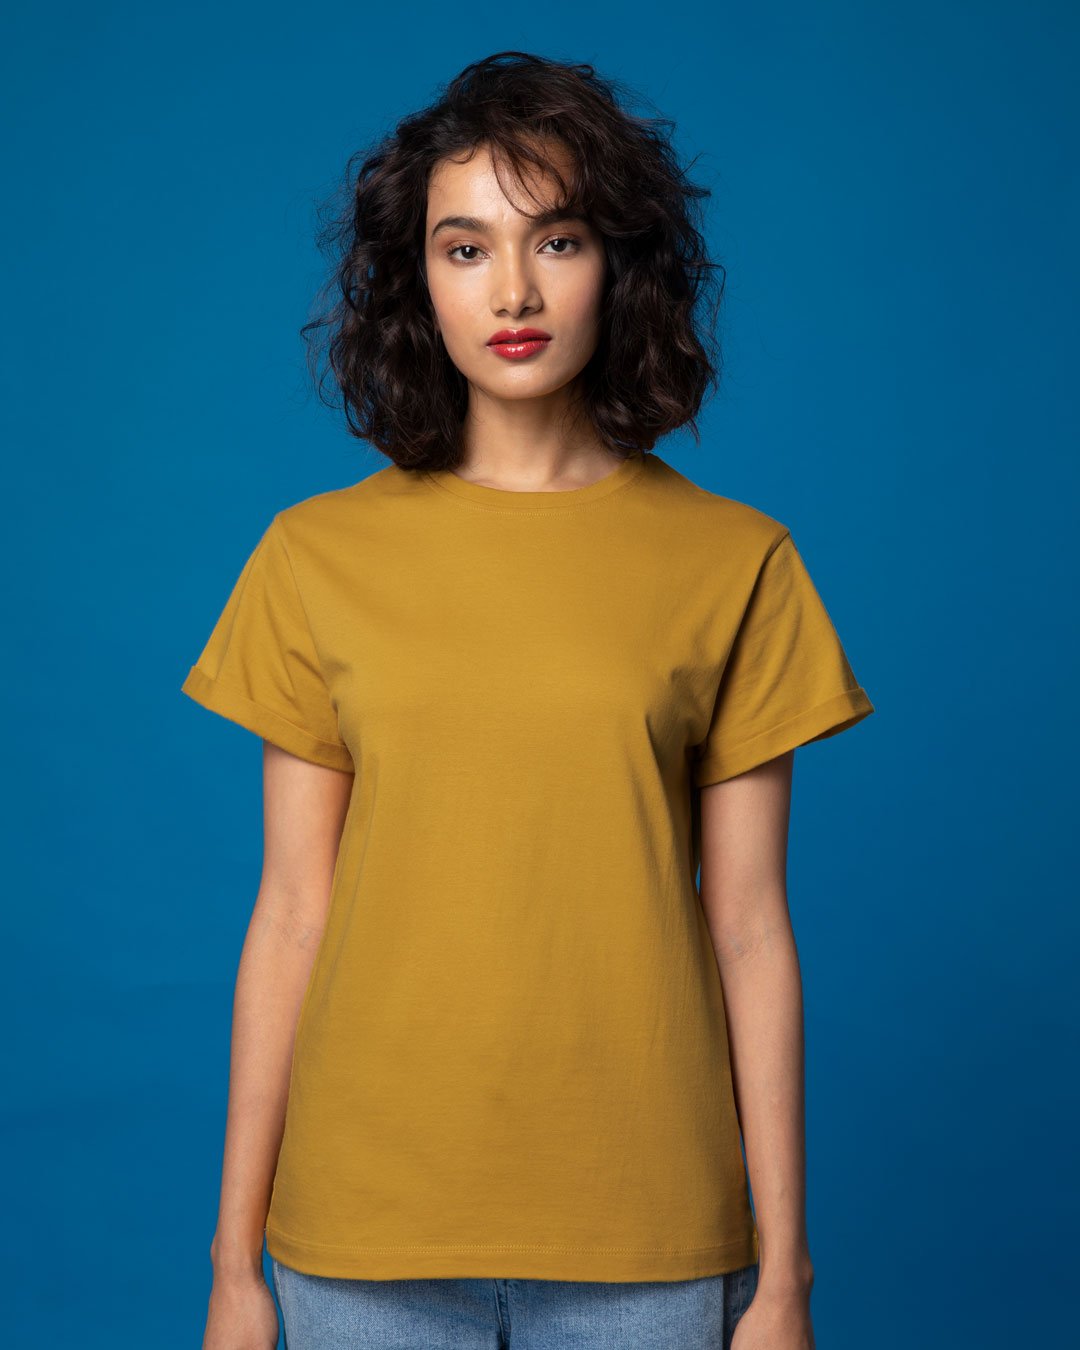 mustard-yellow-boyfriend-t-shirt-women-s-plain-boyfriend-t-shirts-196427-1554208692 for her Mustard Yellow